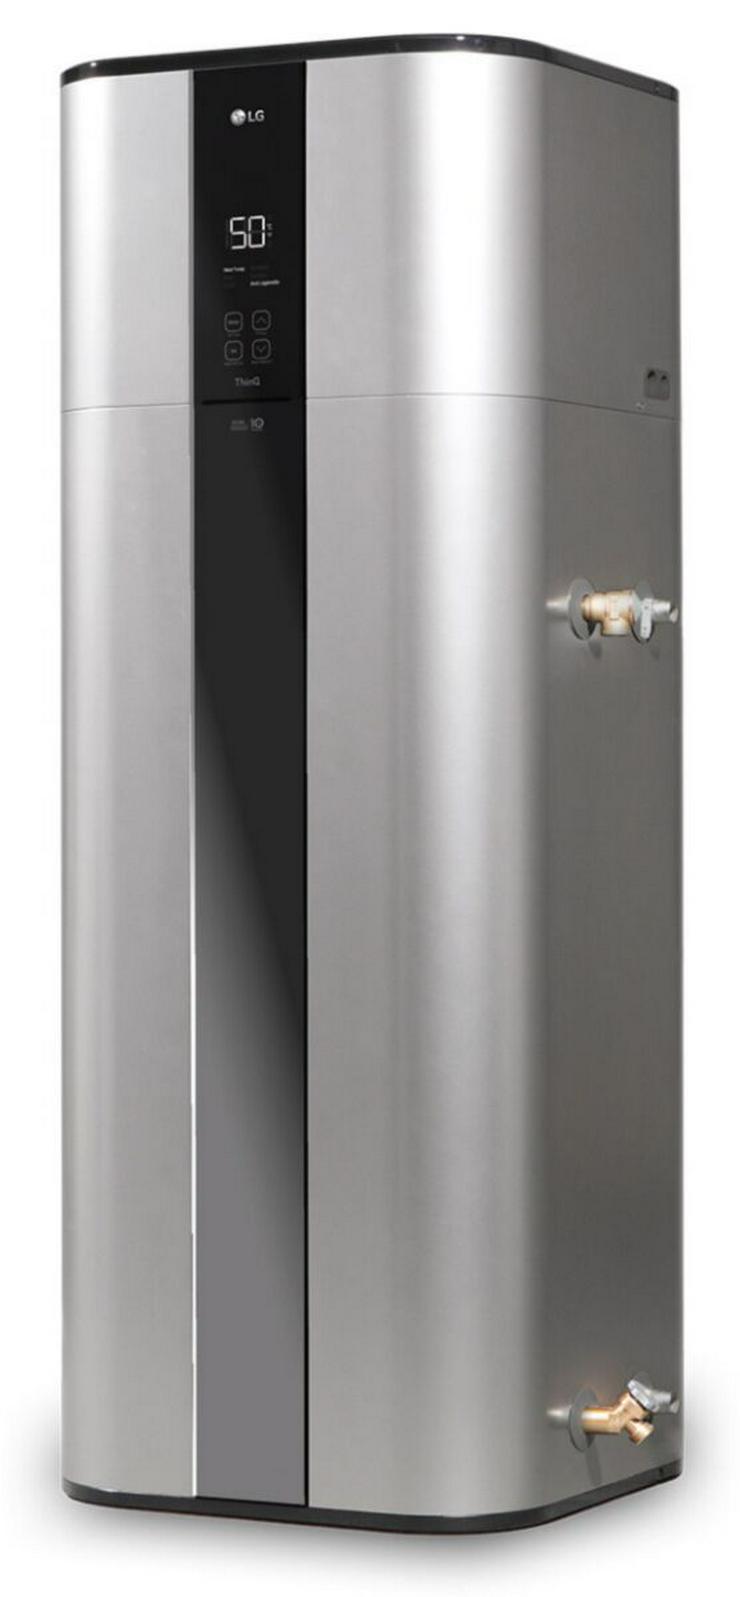 1A Luft Warmwasser Wärmepumpe LG Therma V Dual-Inverter R134A - Wärmepumpen - Bild 1